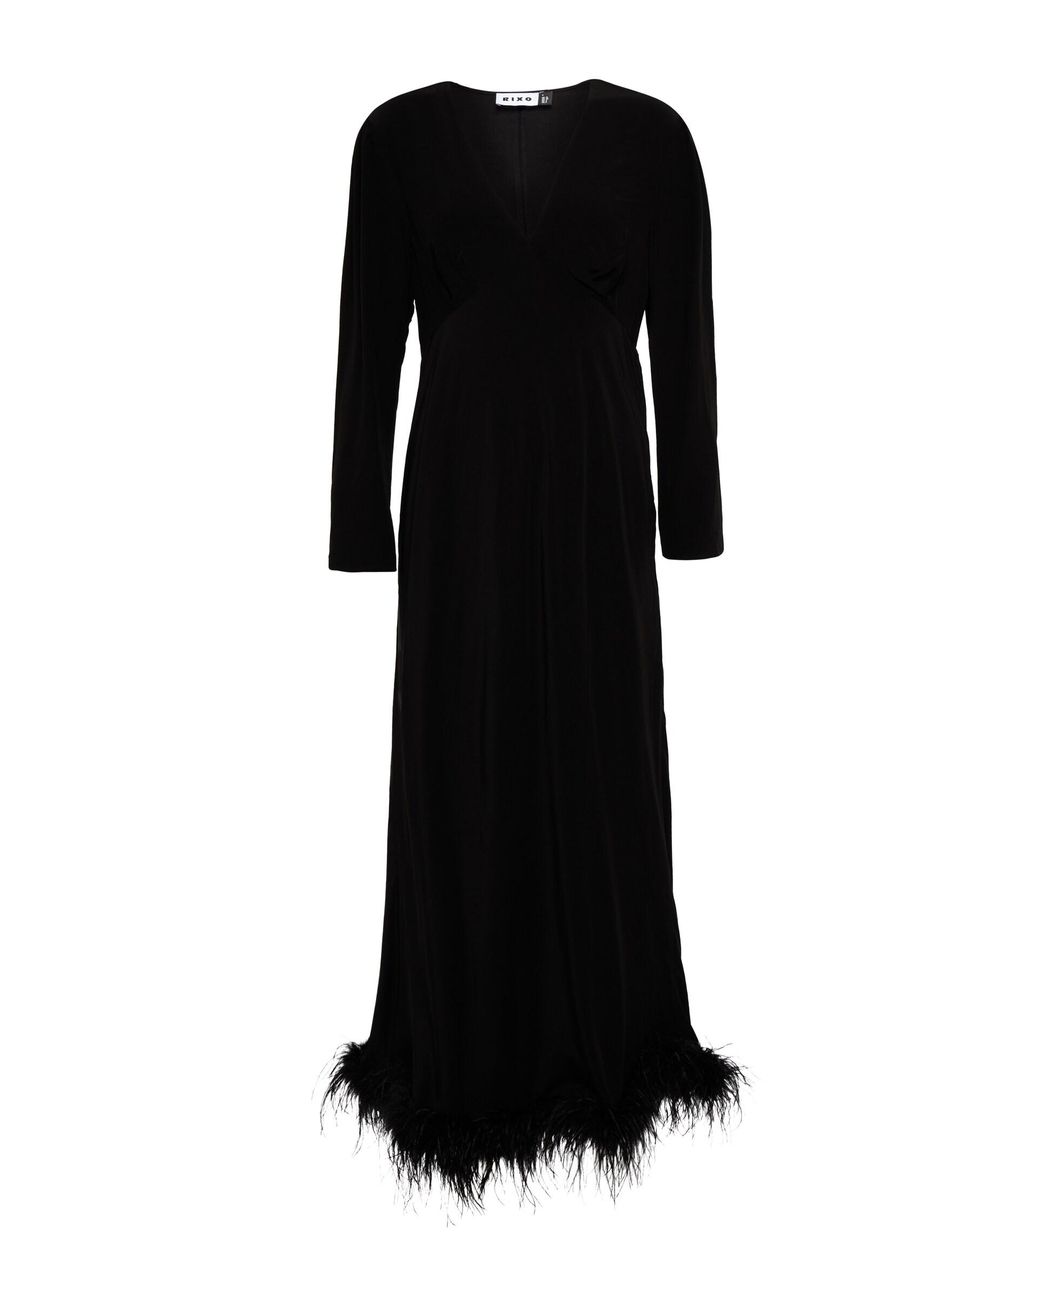 RIXO London Mya Feather-trimmed Midi Dress in Black | Lyst